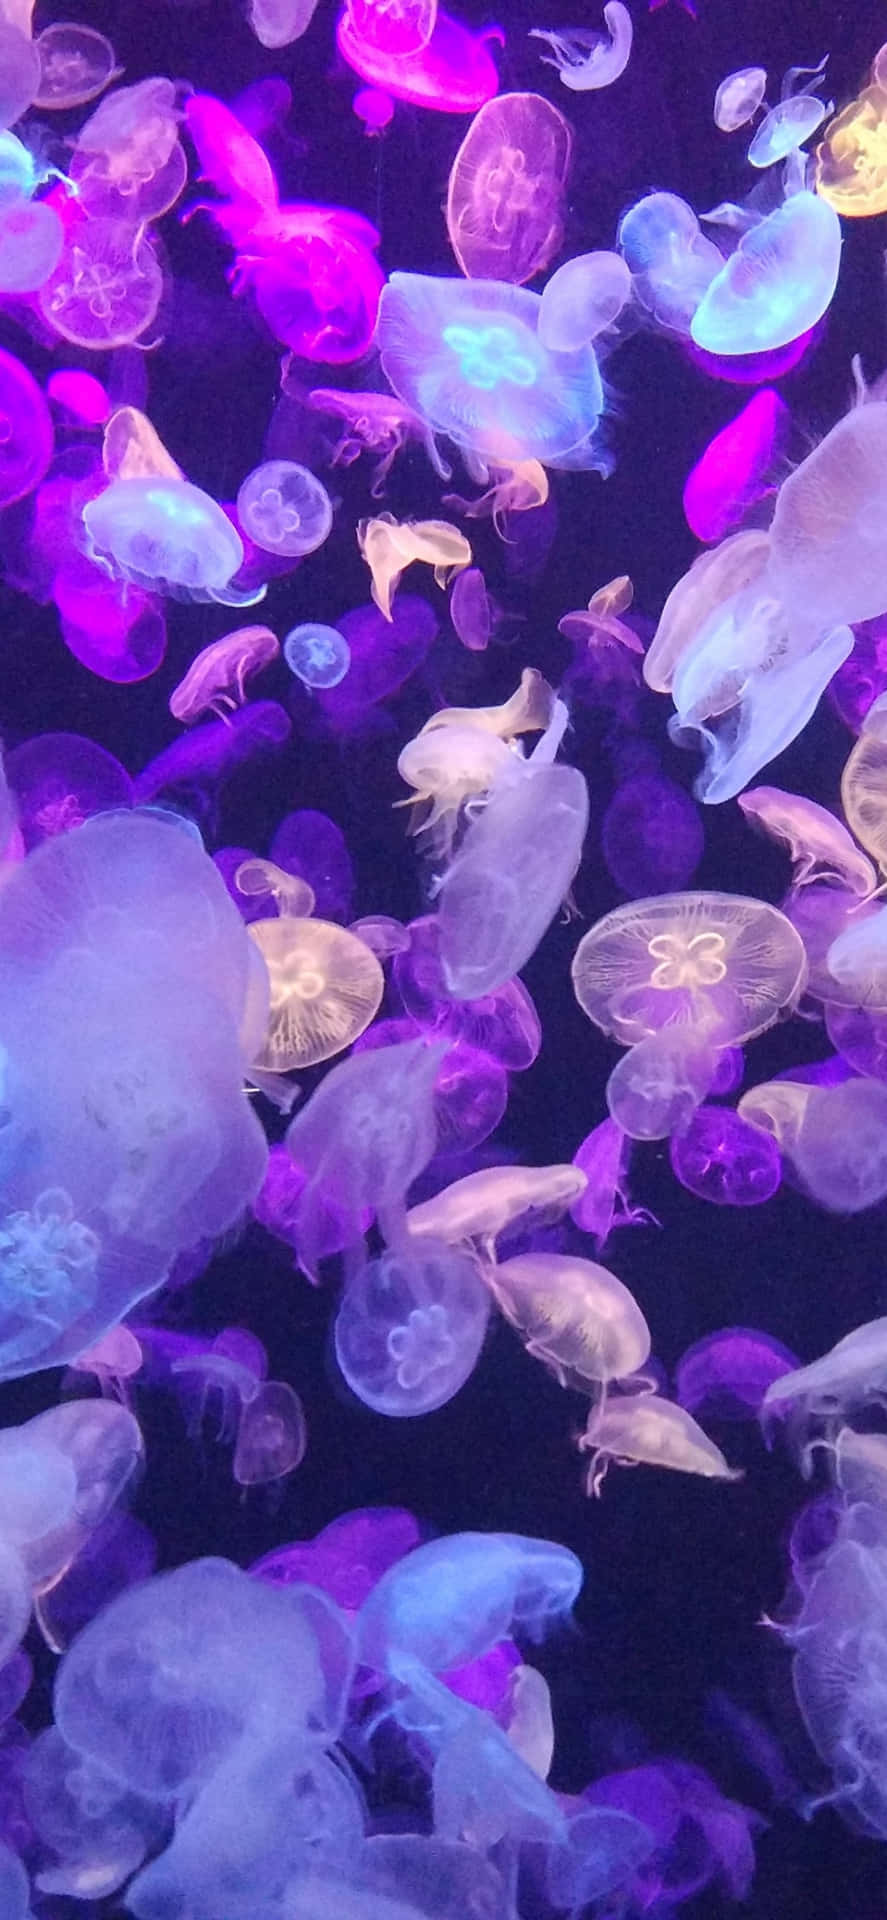 A school of purple jellyfish swimming in the ocean. - Underwater